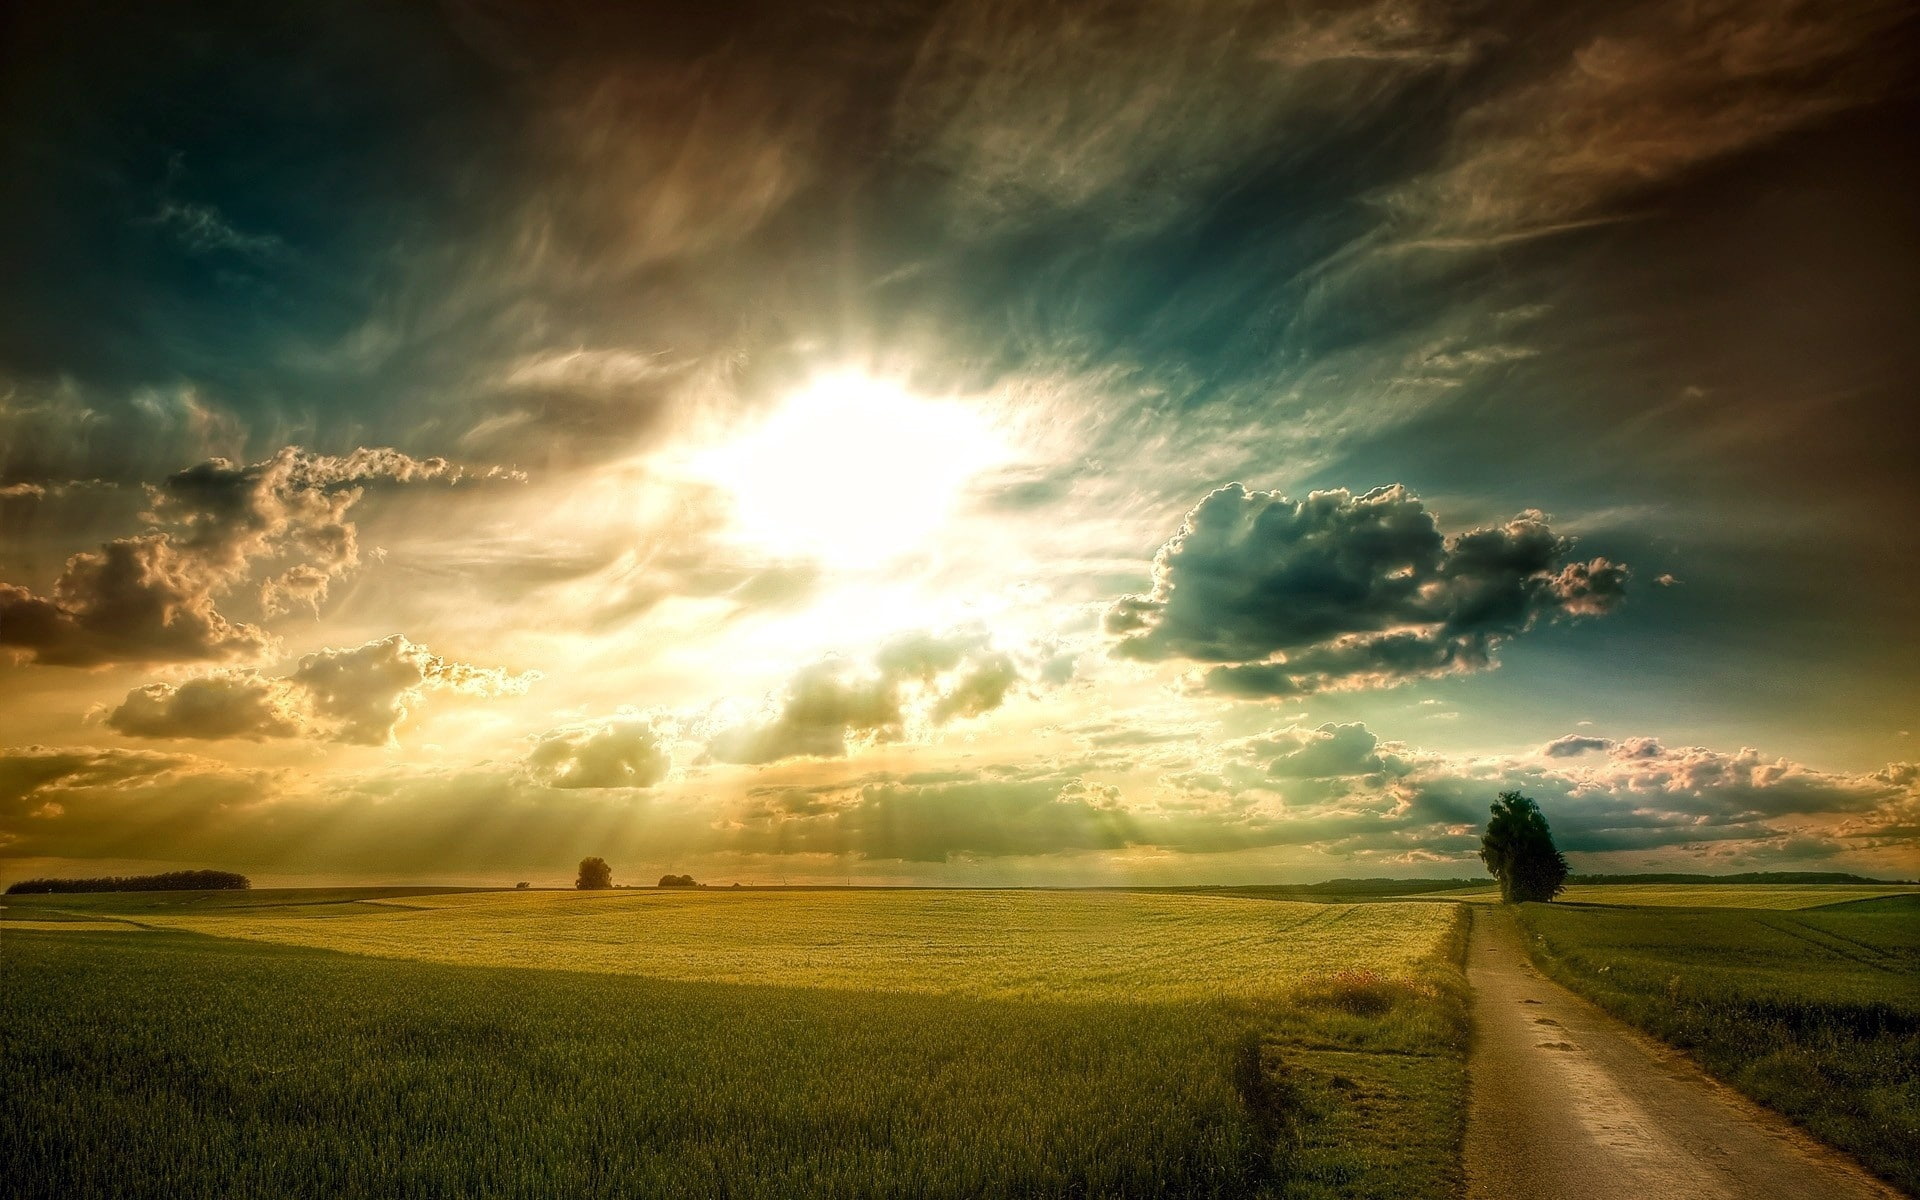 Plains landscape, grass, fields, road, tree, sky clouds, sun rays